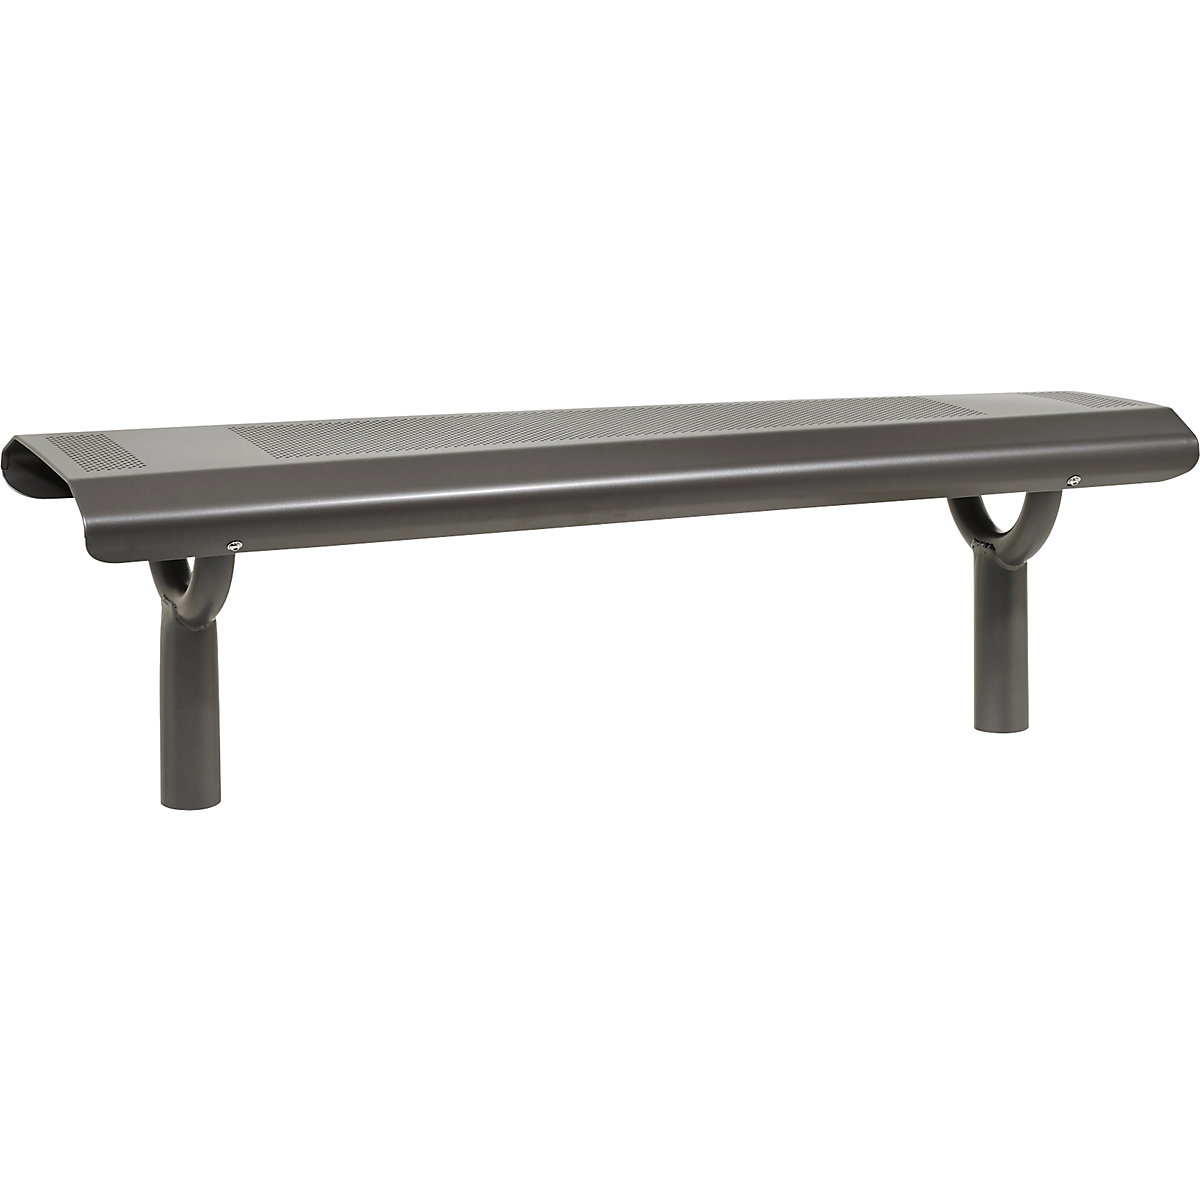 OSLO bench made of steel – PROCITY